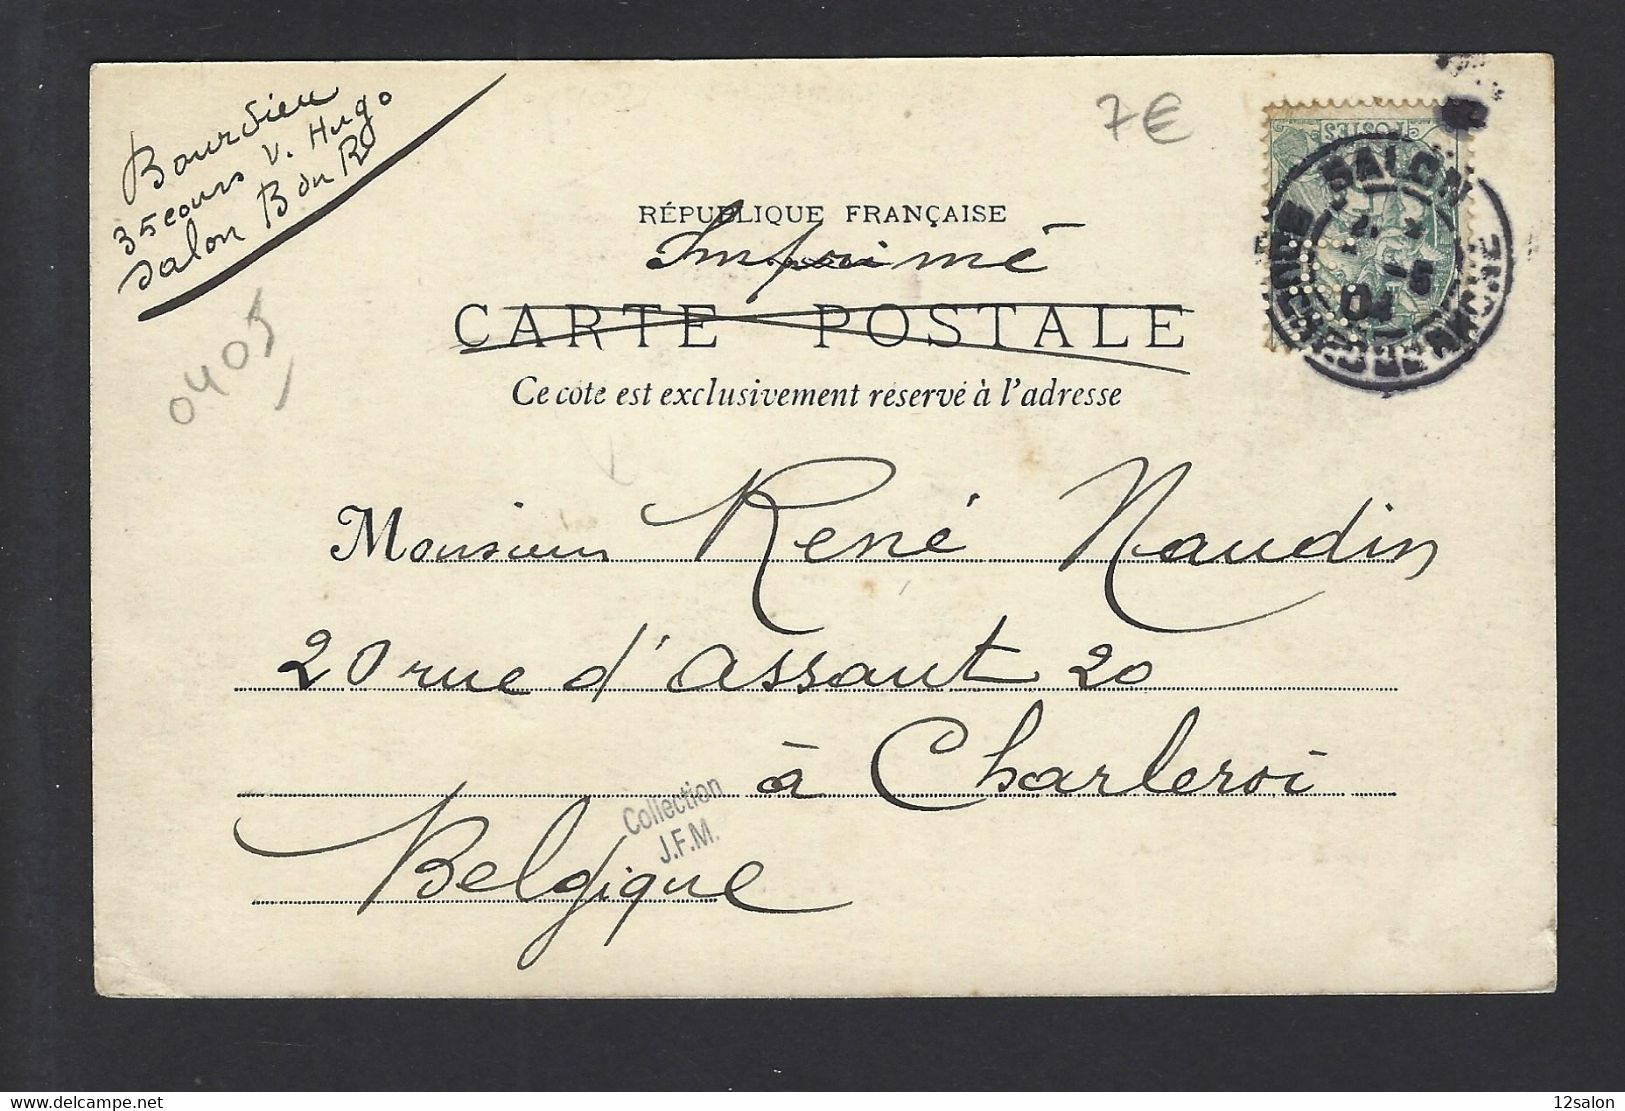 Carte De FRANCE SALON DE PROVENCE Perforée MG 1904 - 1877-1920: Période Semi Moderne